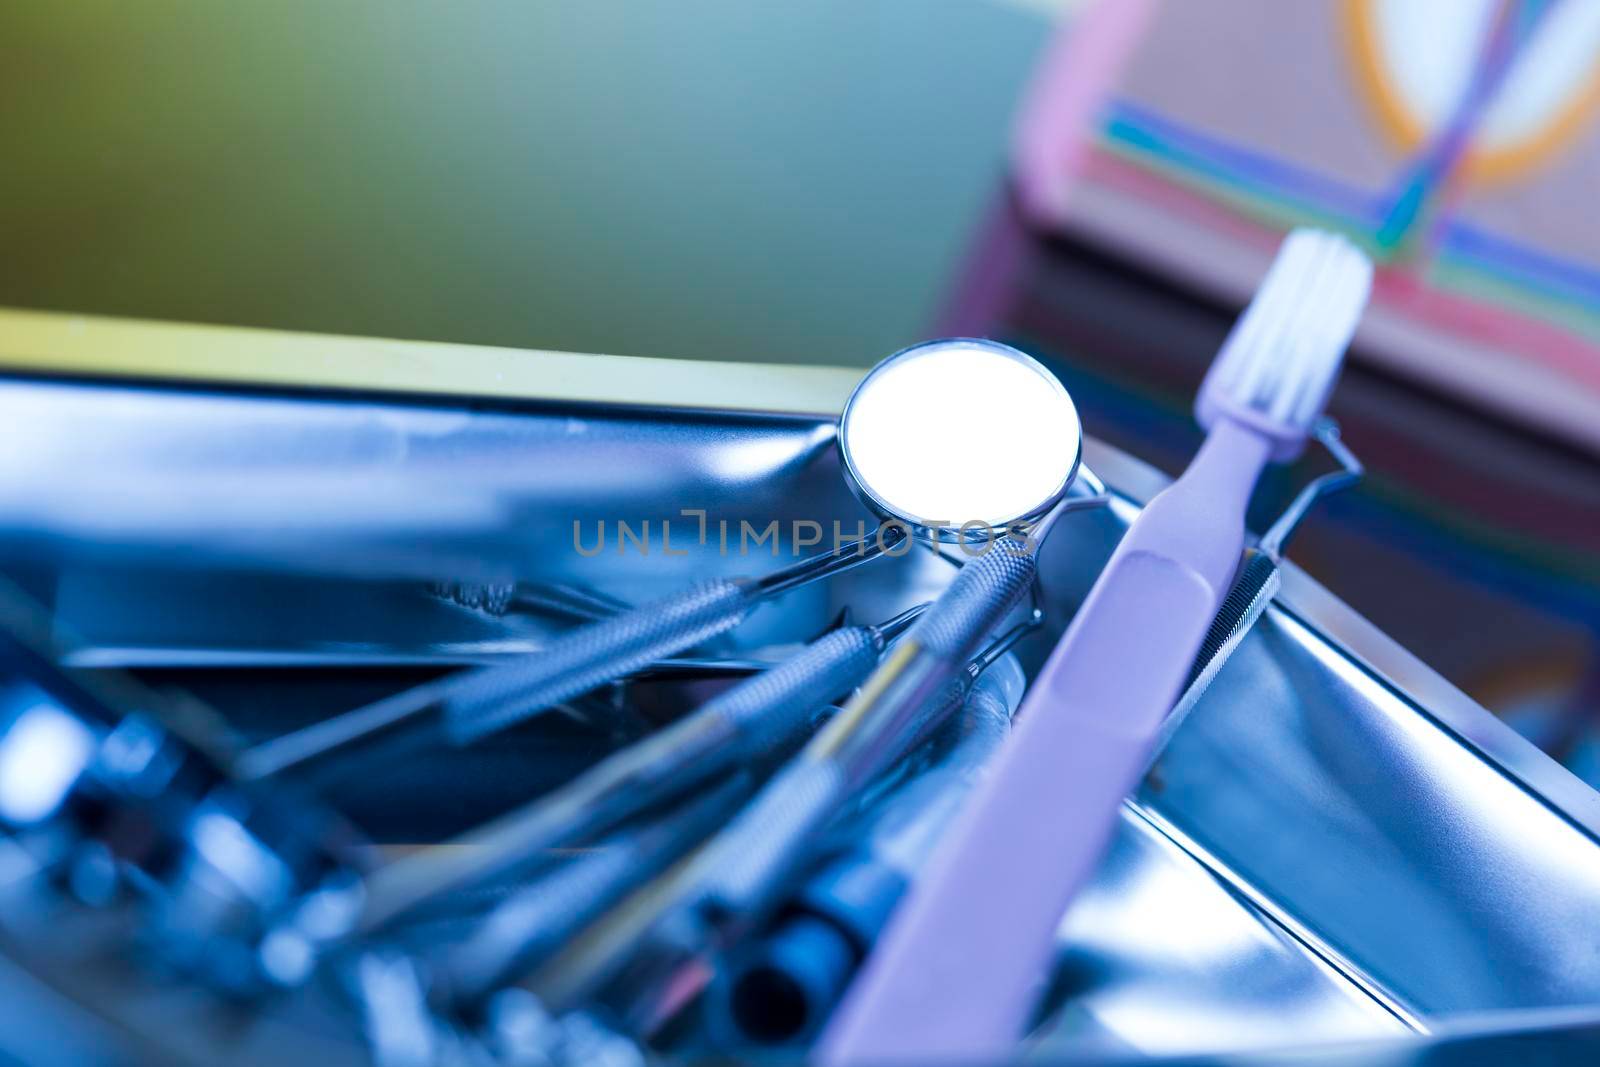 Close-up Dental Instruments